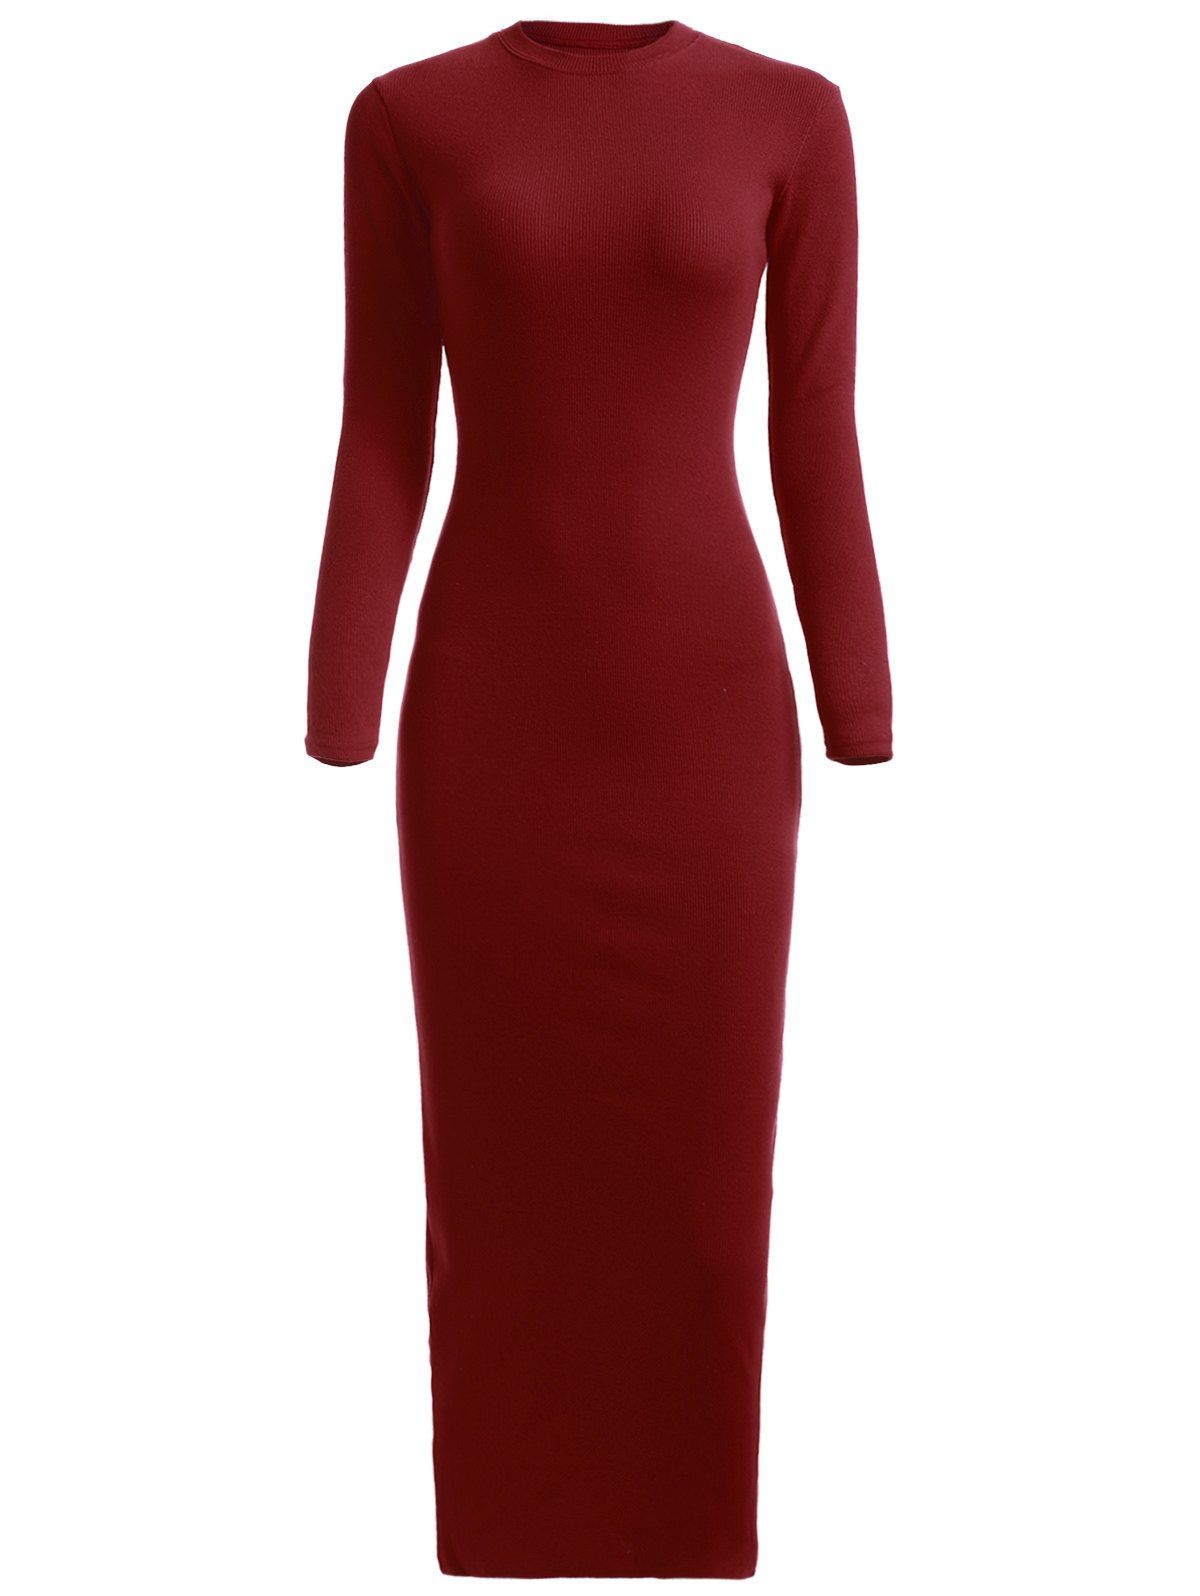 [26% OFF] Maxi Long Sleeve Ribbed Winter Knit Dress | Rosegal